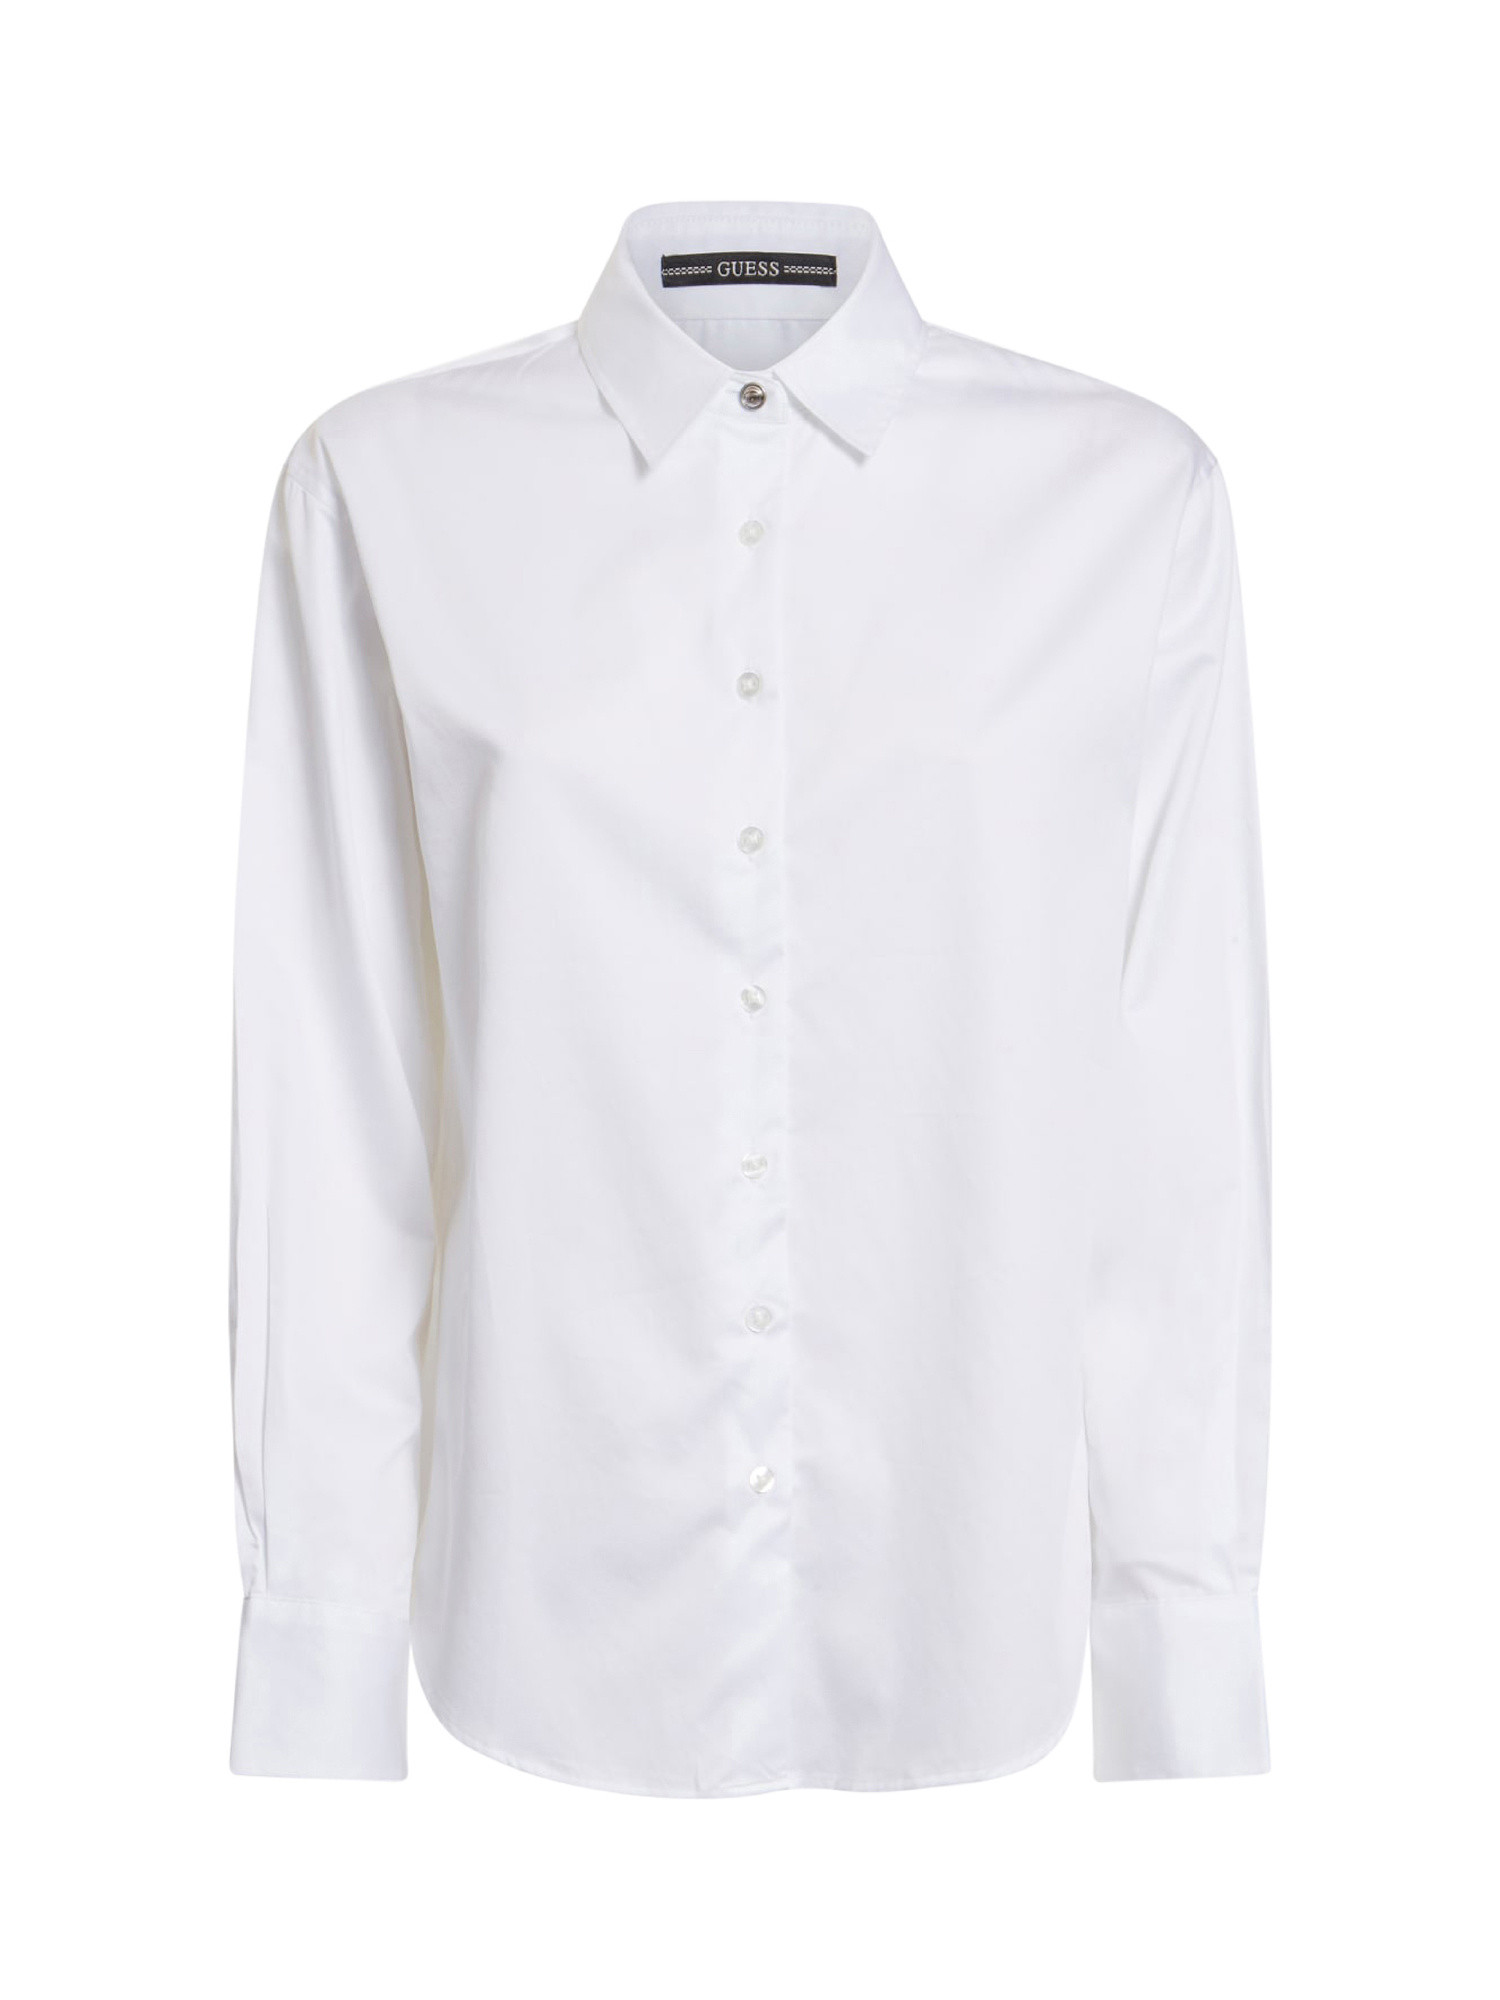 Camicia manica lunga, Bianco, large image number 0